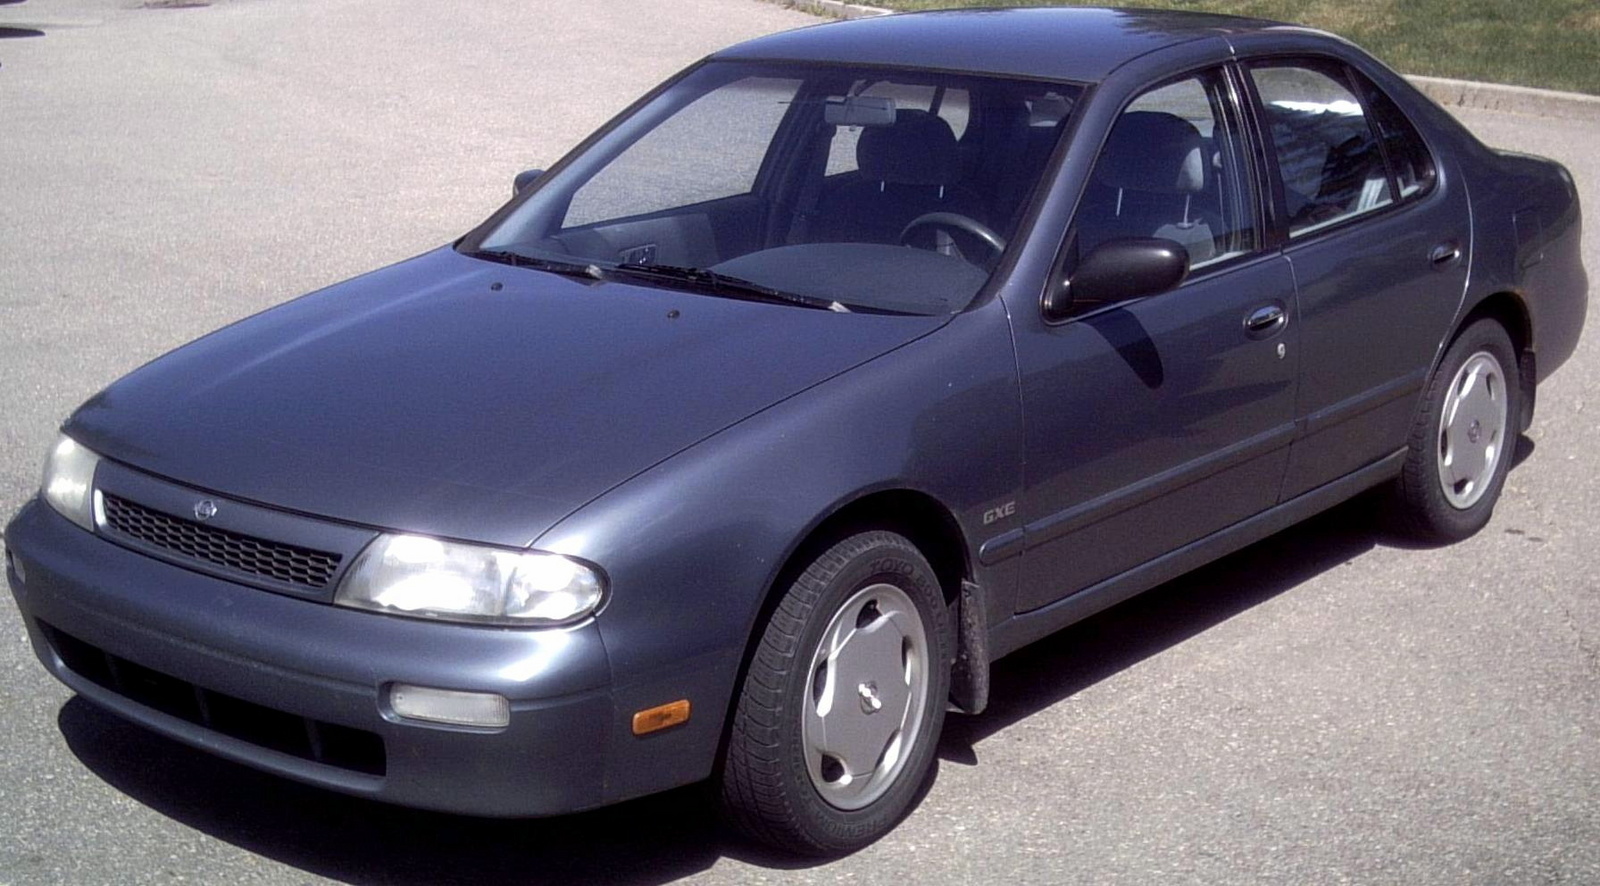 1994 Nissan altima se review #2